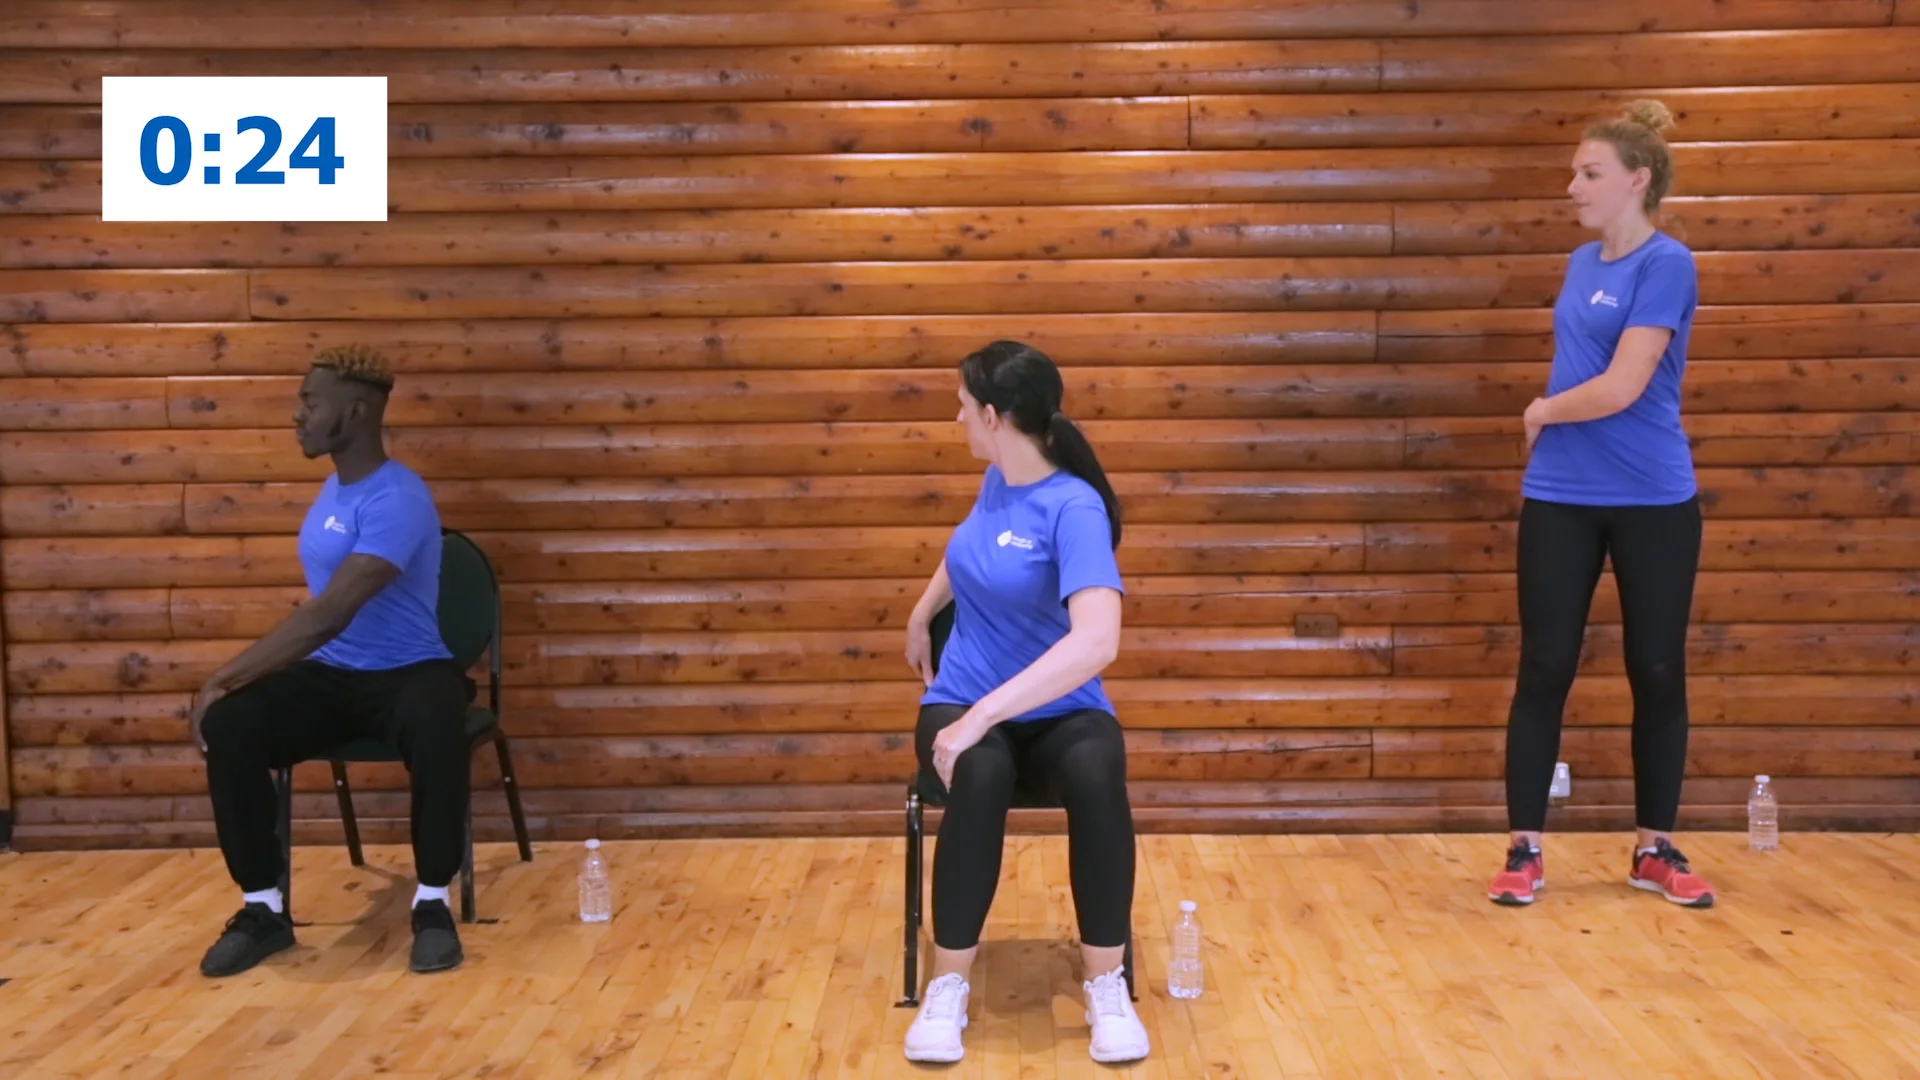 Wellness: Yoga/Pilates Workout for Intermediate on Vimeo